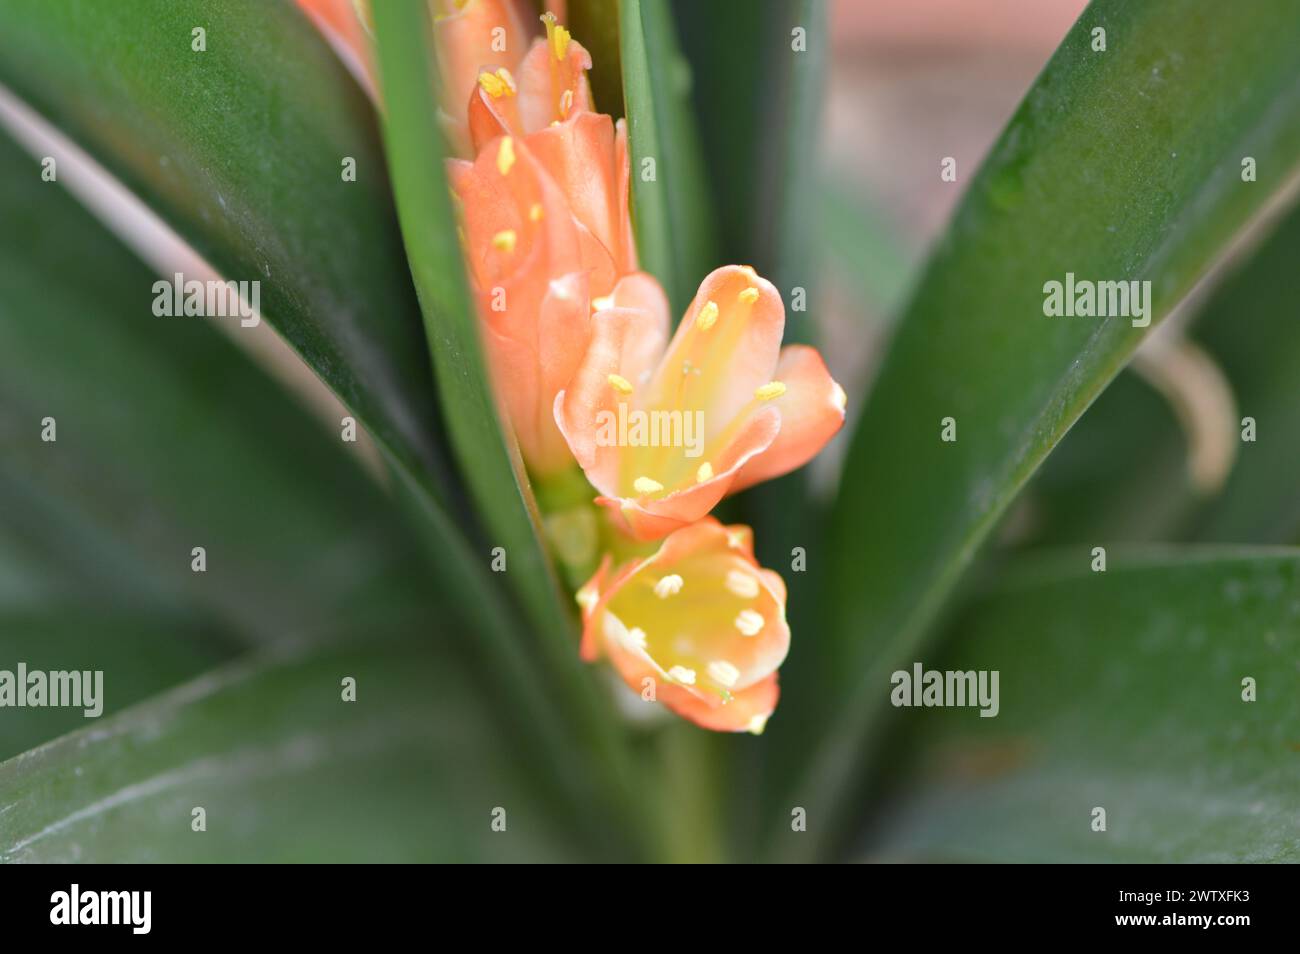 Fotografia macro de una flor naranja Stockfoto